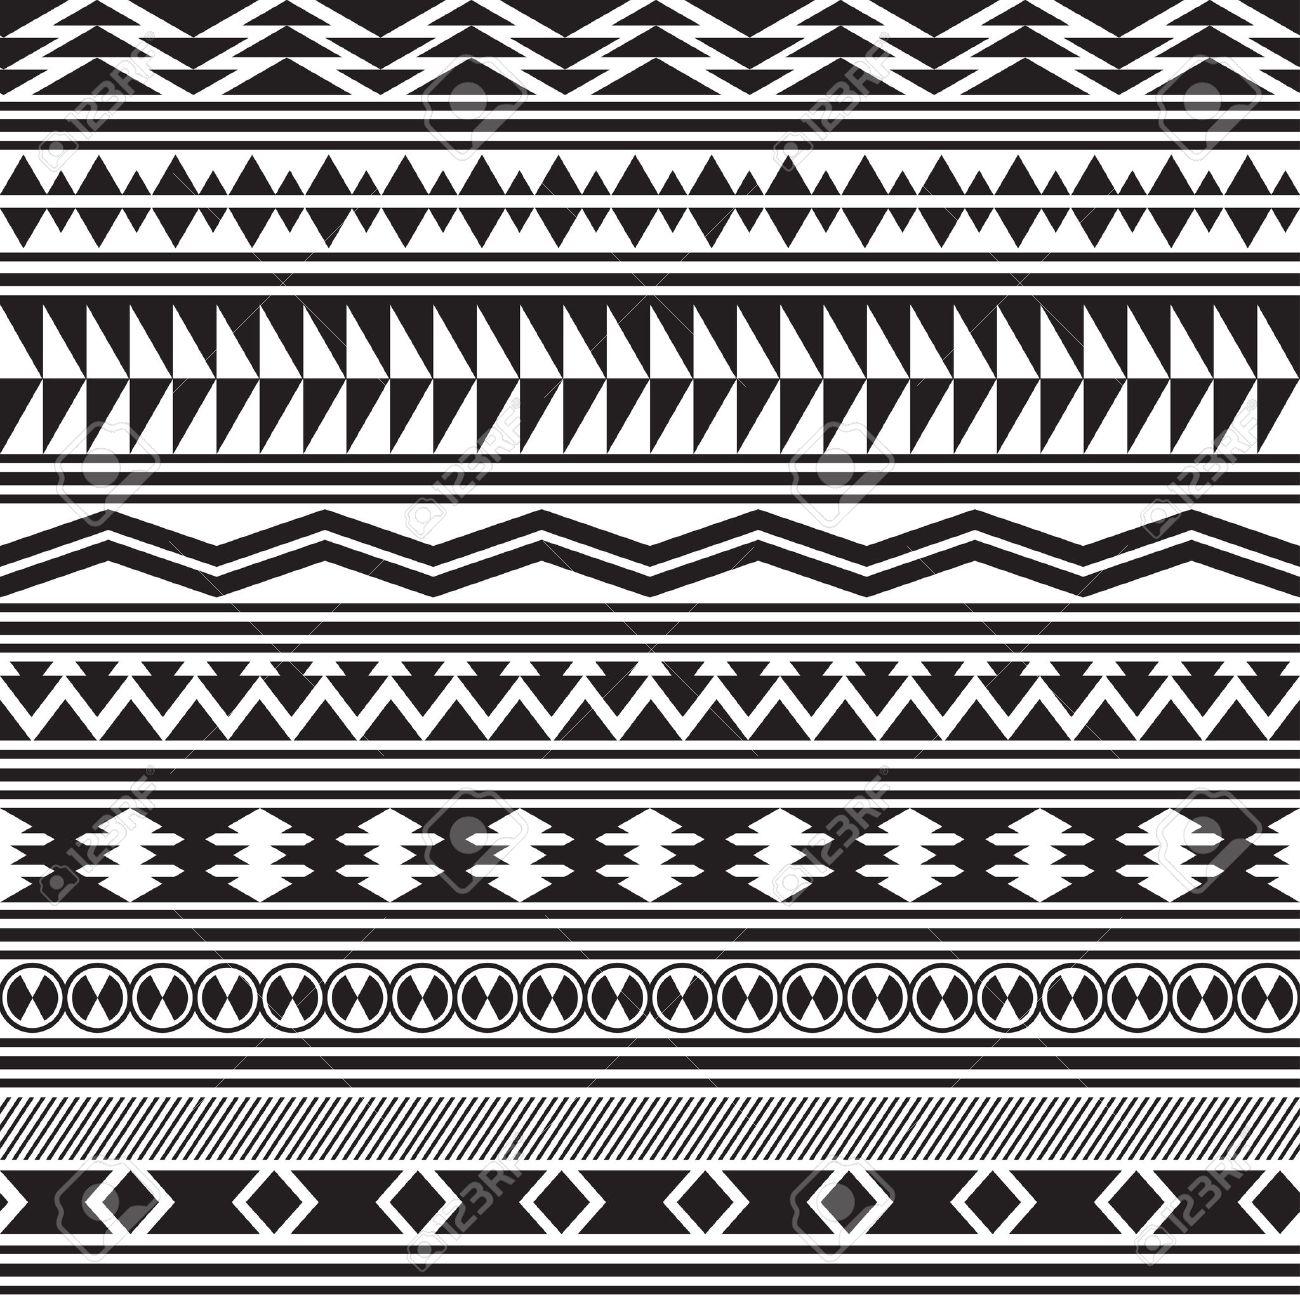 Simple Tribal Pattern Wallpapers - Top Free Simple Tribal Pattern ...